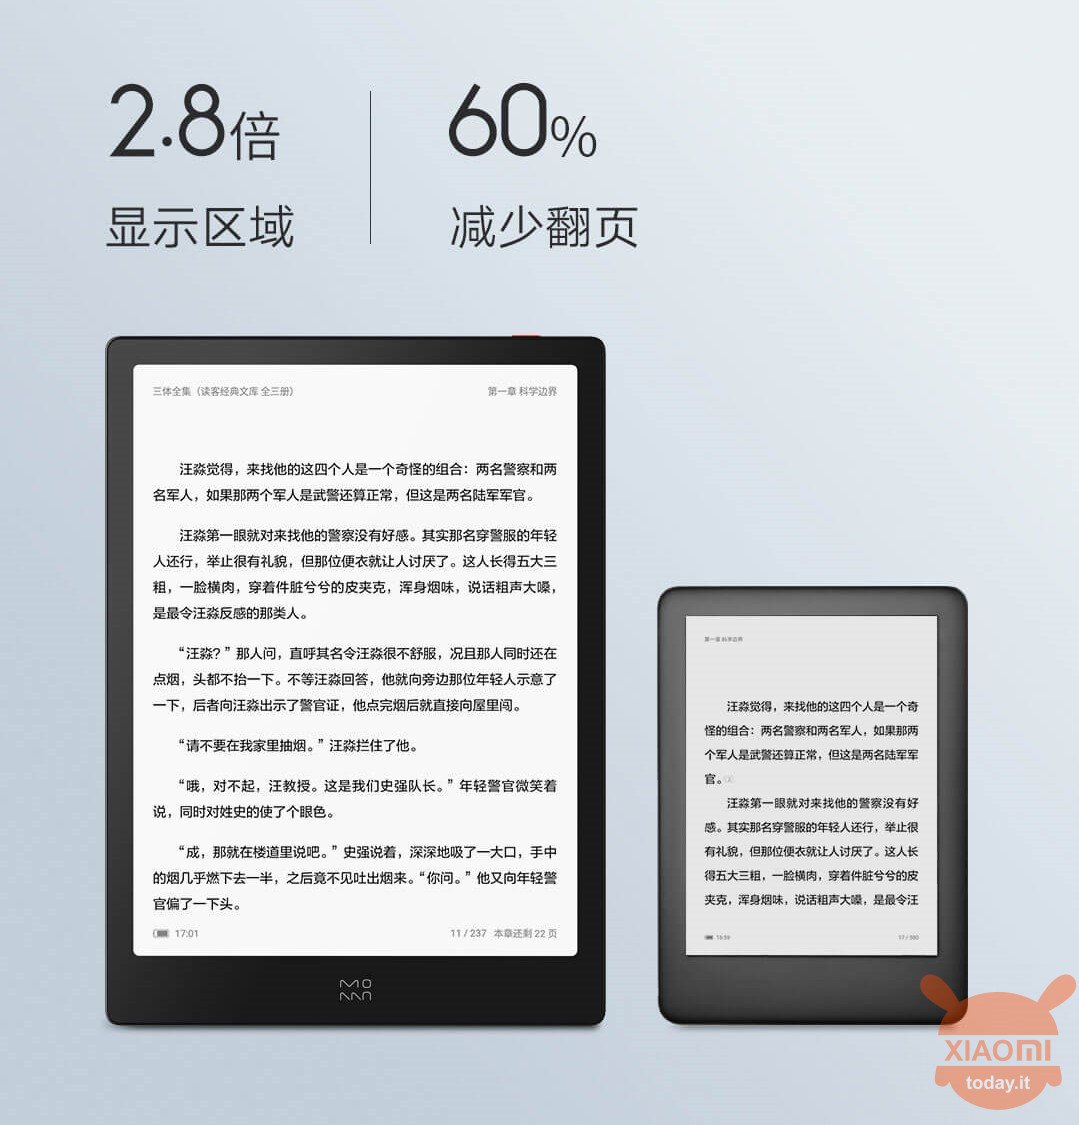 Xiaomi Prasentiert 10 Inkpad X Ebook Reader Grosser Als Je Zuvor